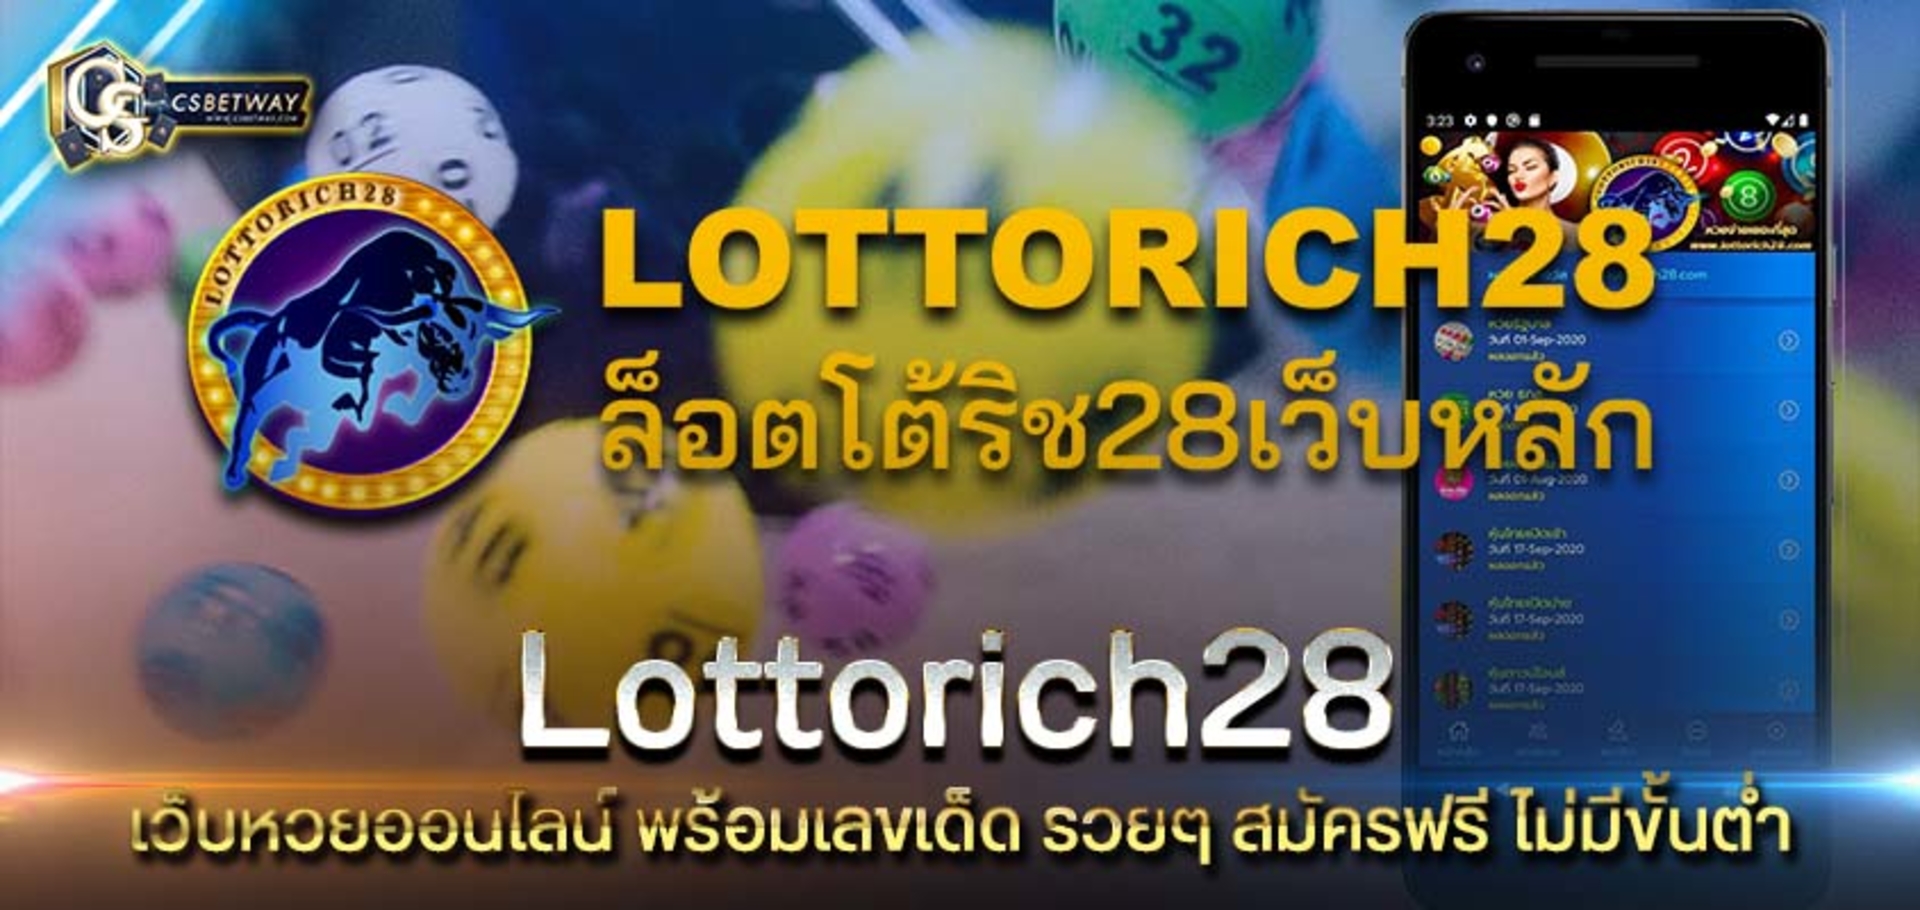 lottorich28 เว็บหวยออนไลน์ พร้อมเลขเด็ด รวยๆ สมัครฟรี ไม่มีขั้นต่ำ